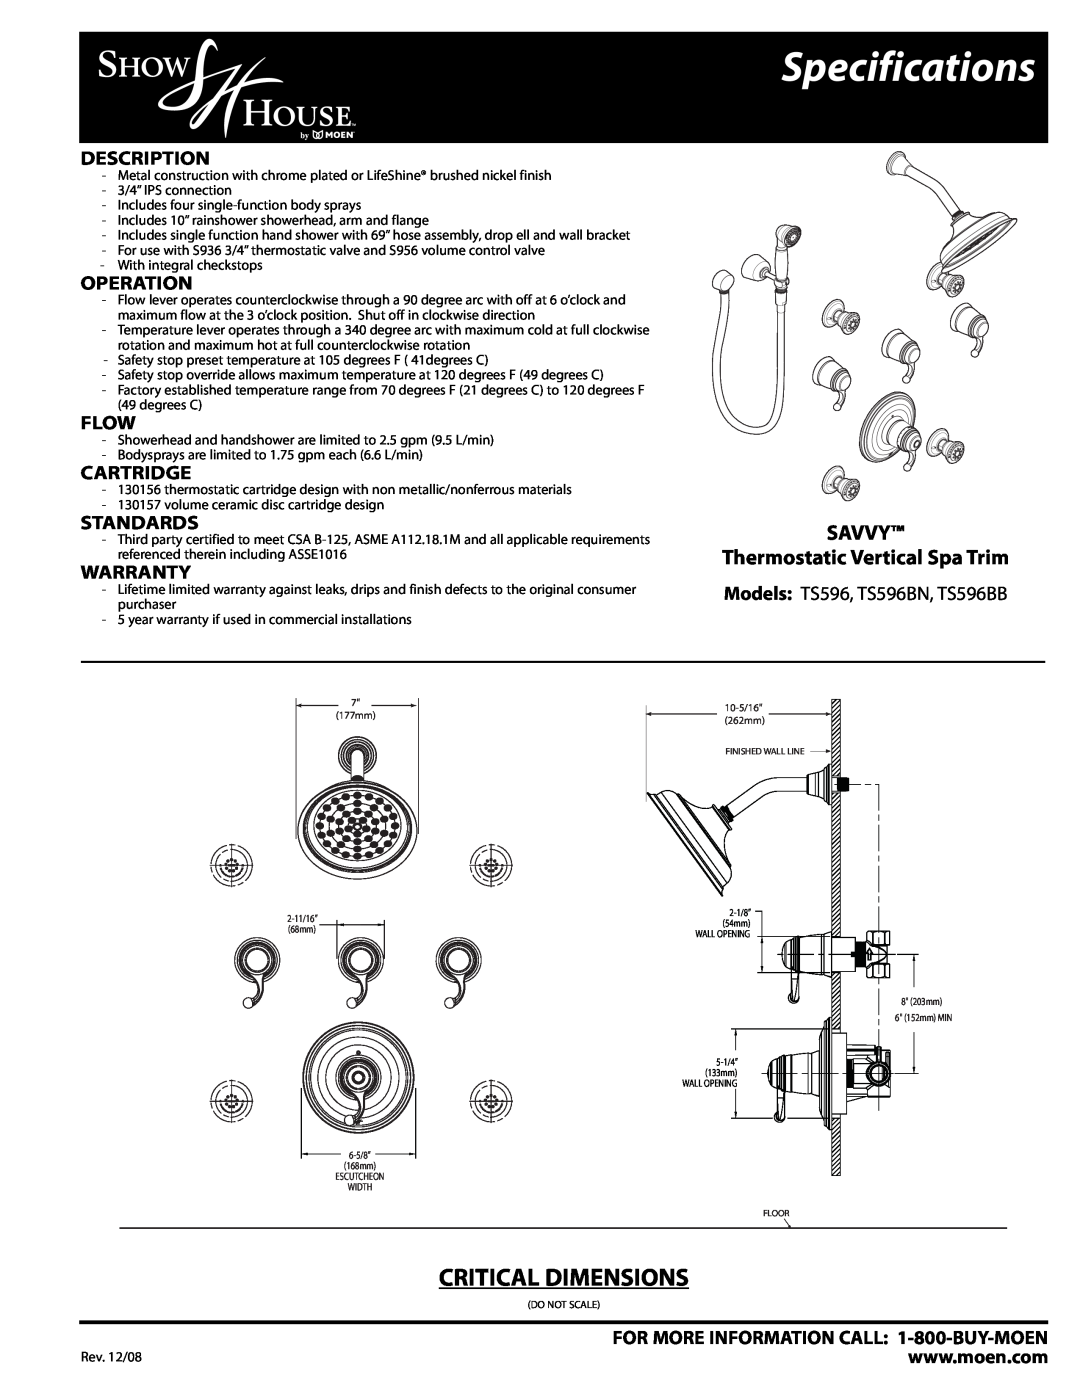 Moen TS596BN warranty Specifications, SAVVY Thermostatic Vertical Spa Trim, Description, Operation, Flow, Cartridge 